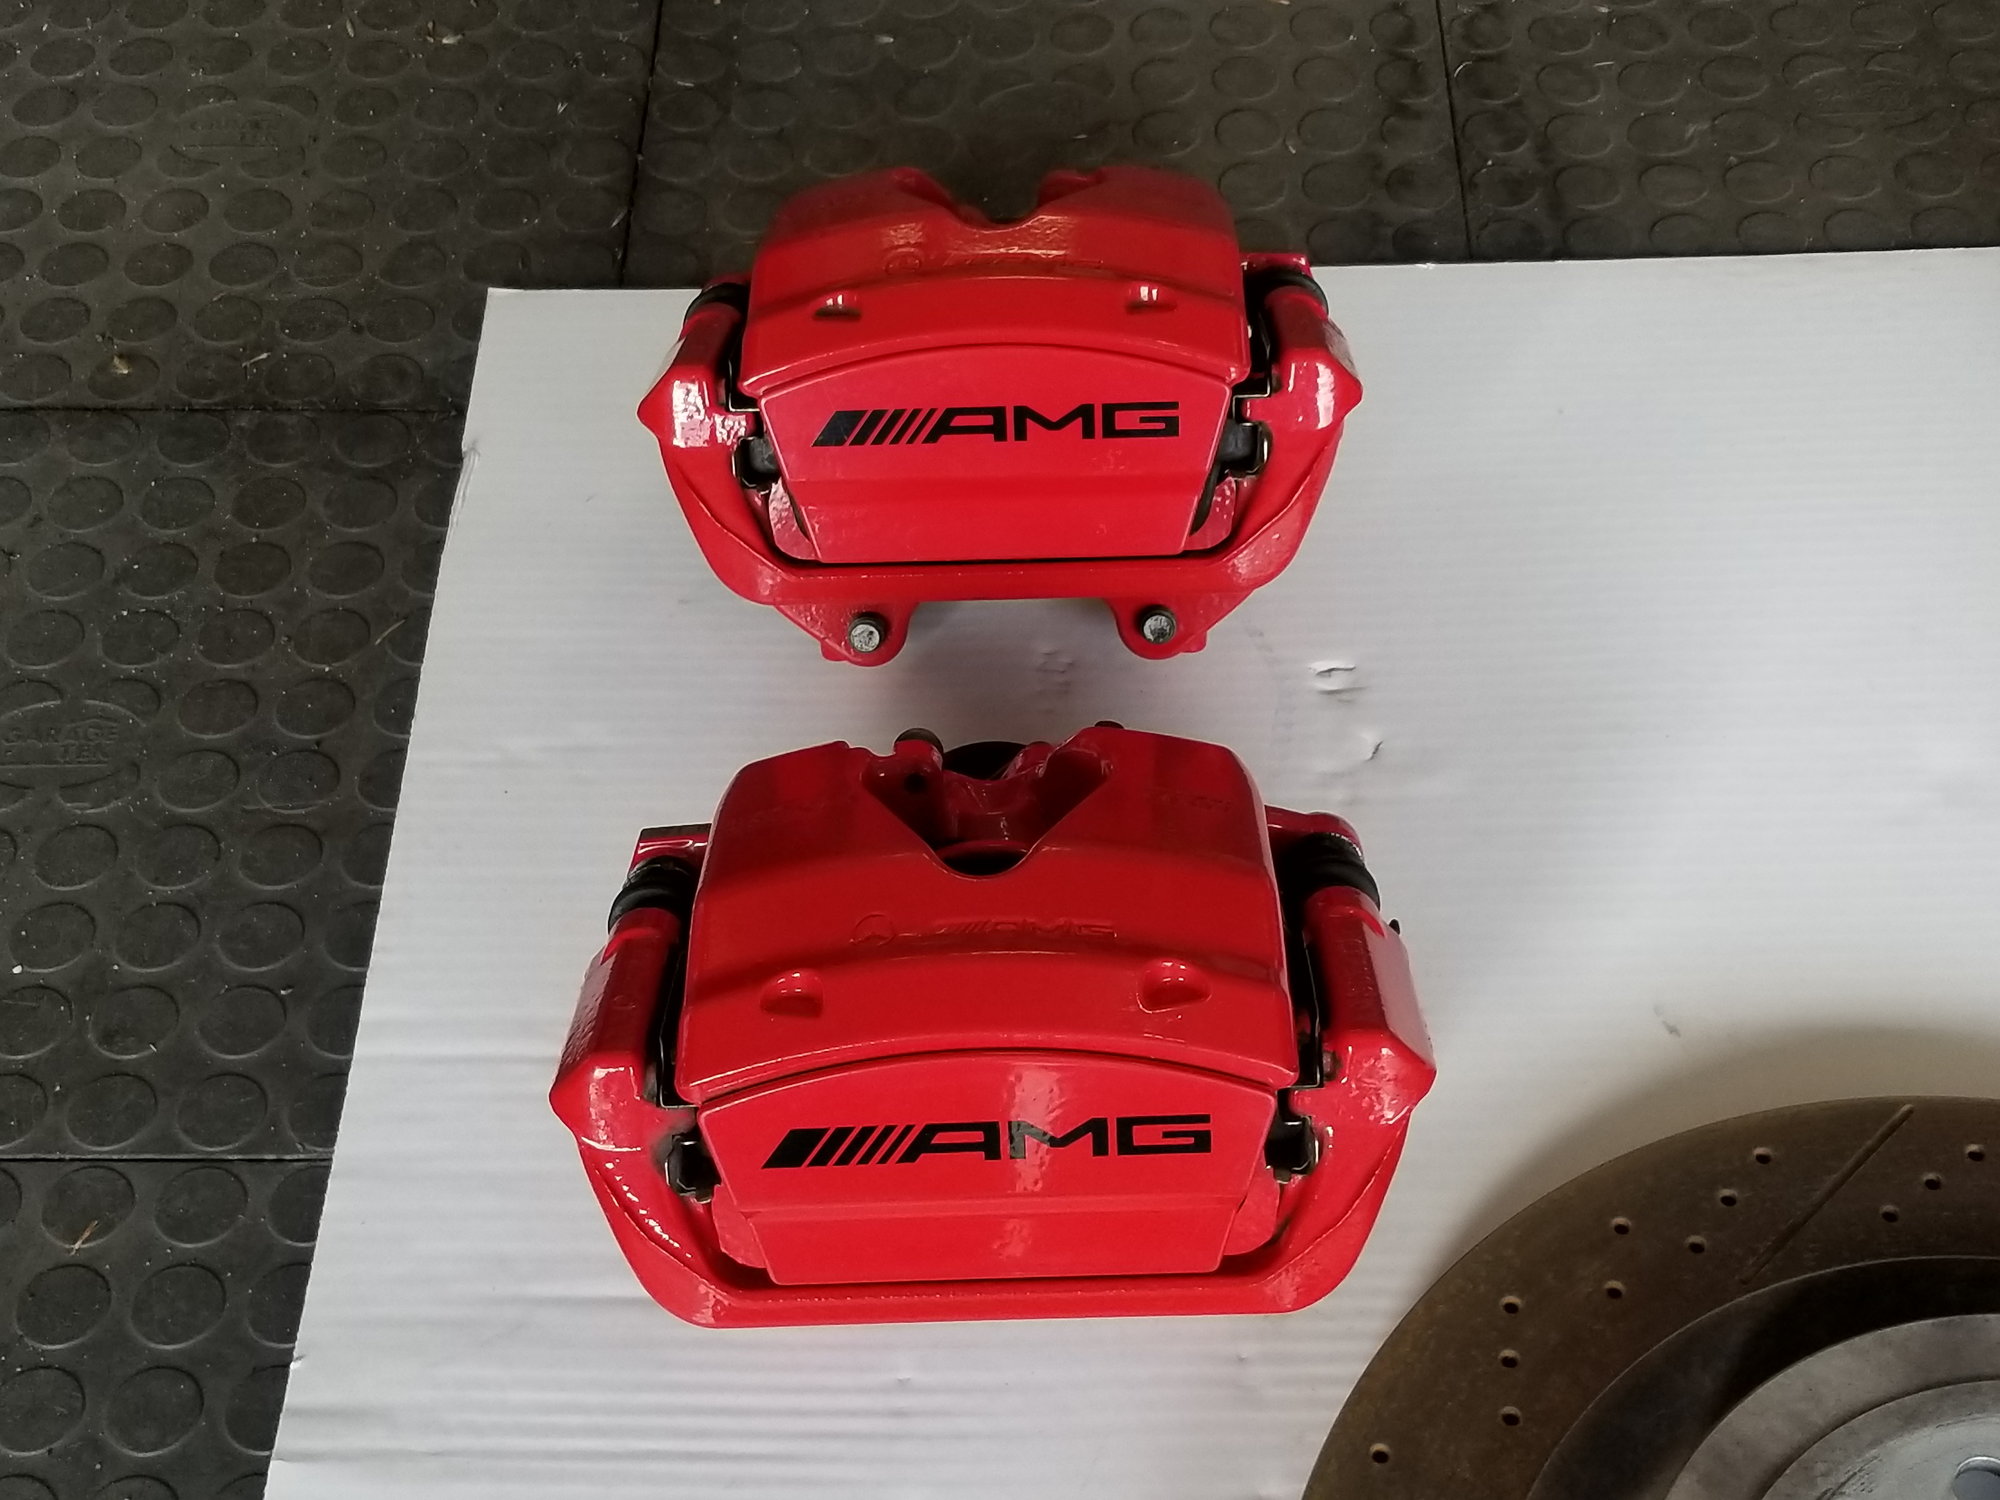 Brakes - W205 C63 S AMG Red Brake Calipers & Rotors - Used - 2015 to 2018 Mercedes-Benz C63 AMG S - 2015 to 2018 Mercedes-Benz C63 AMG - Westbury, NY 11590, United States